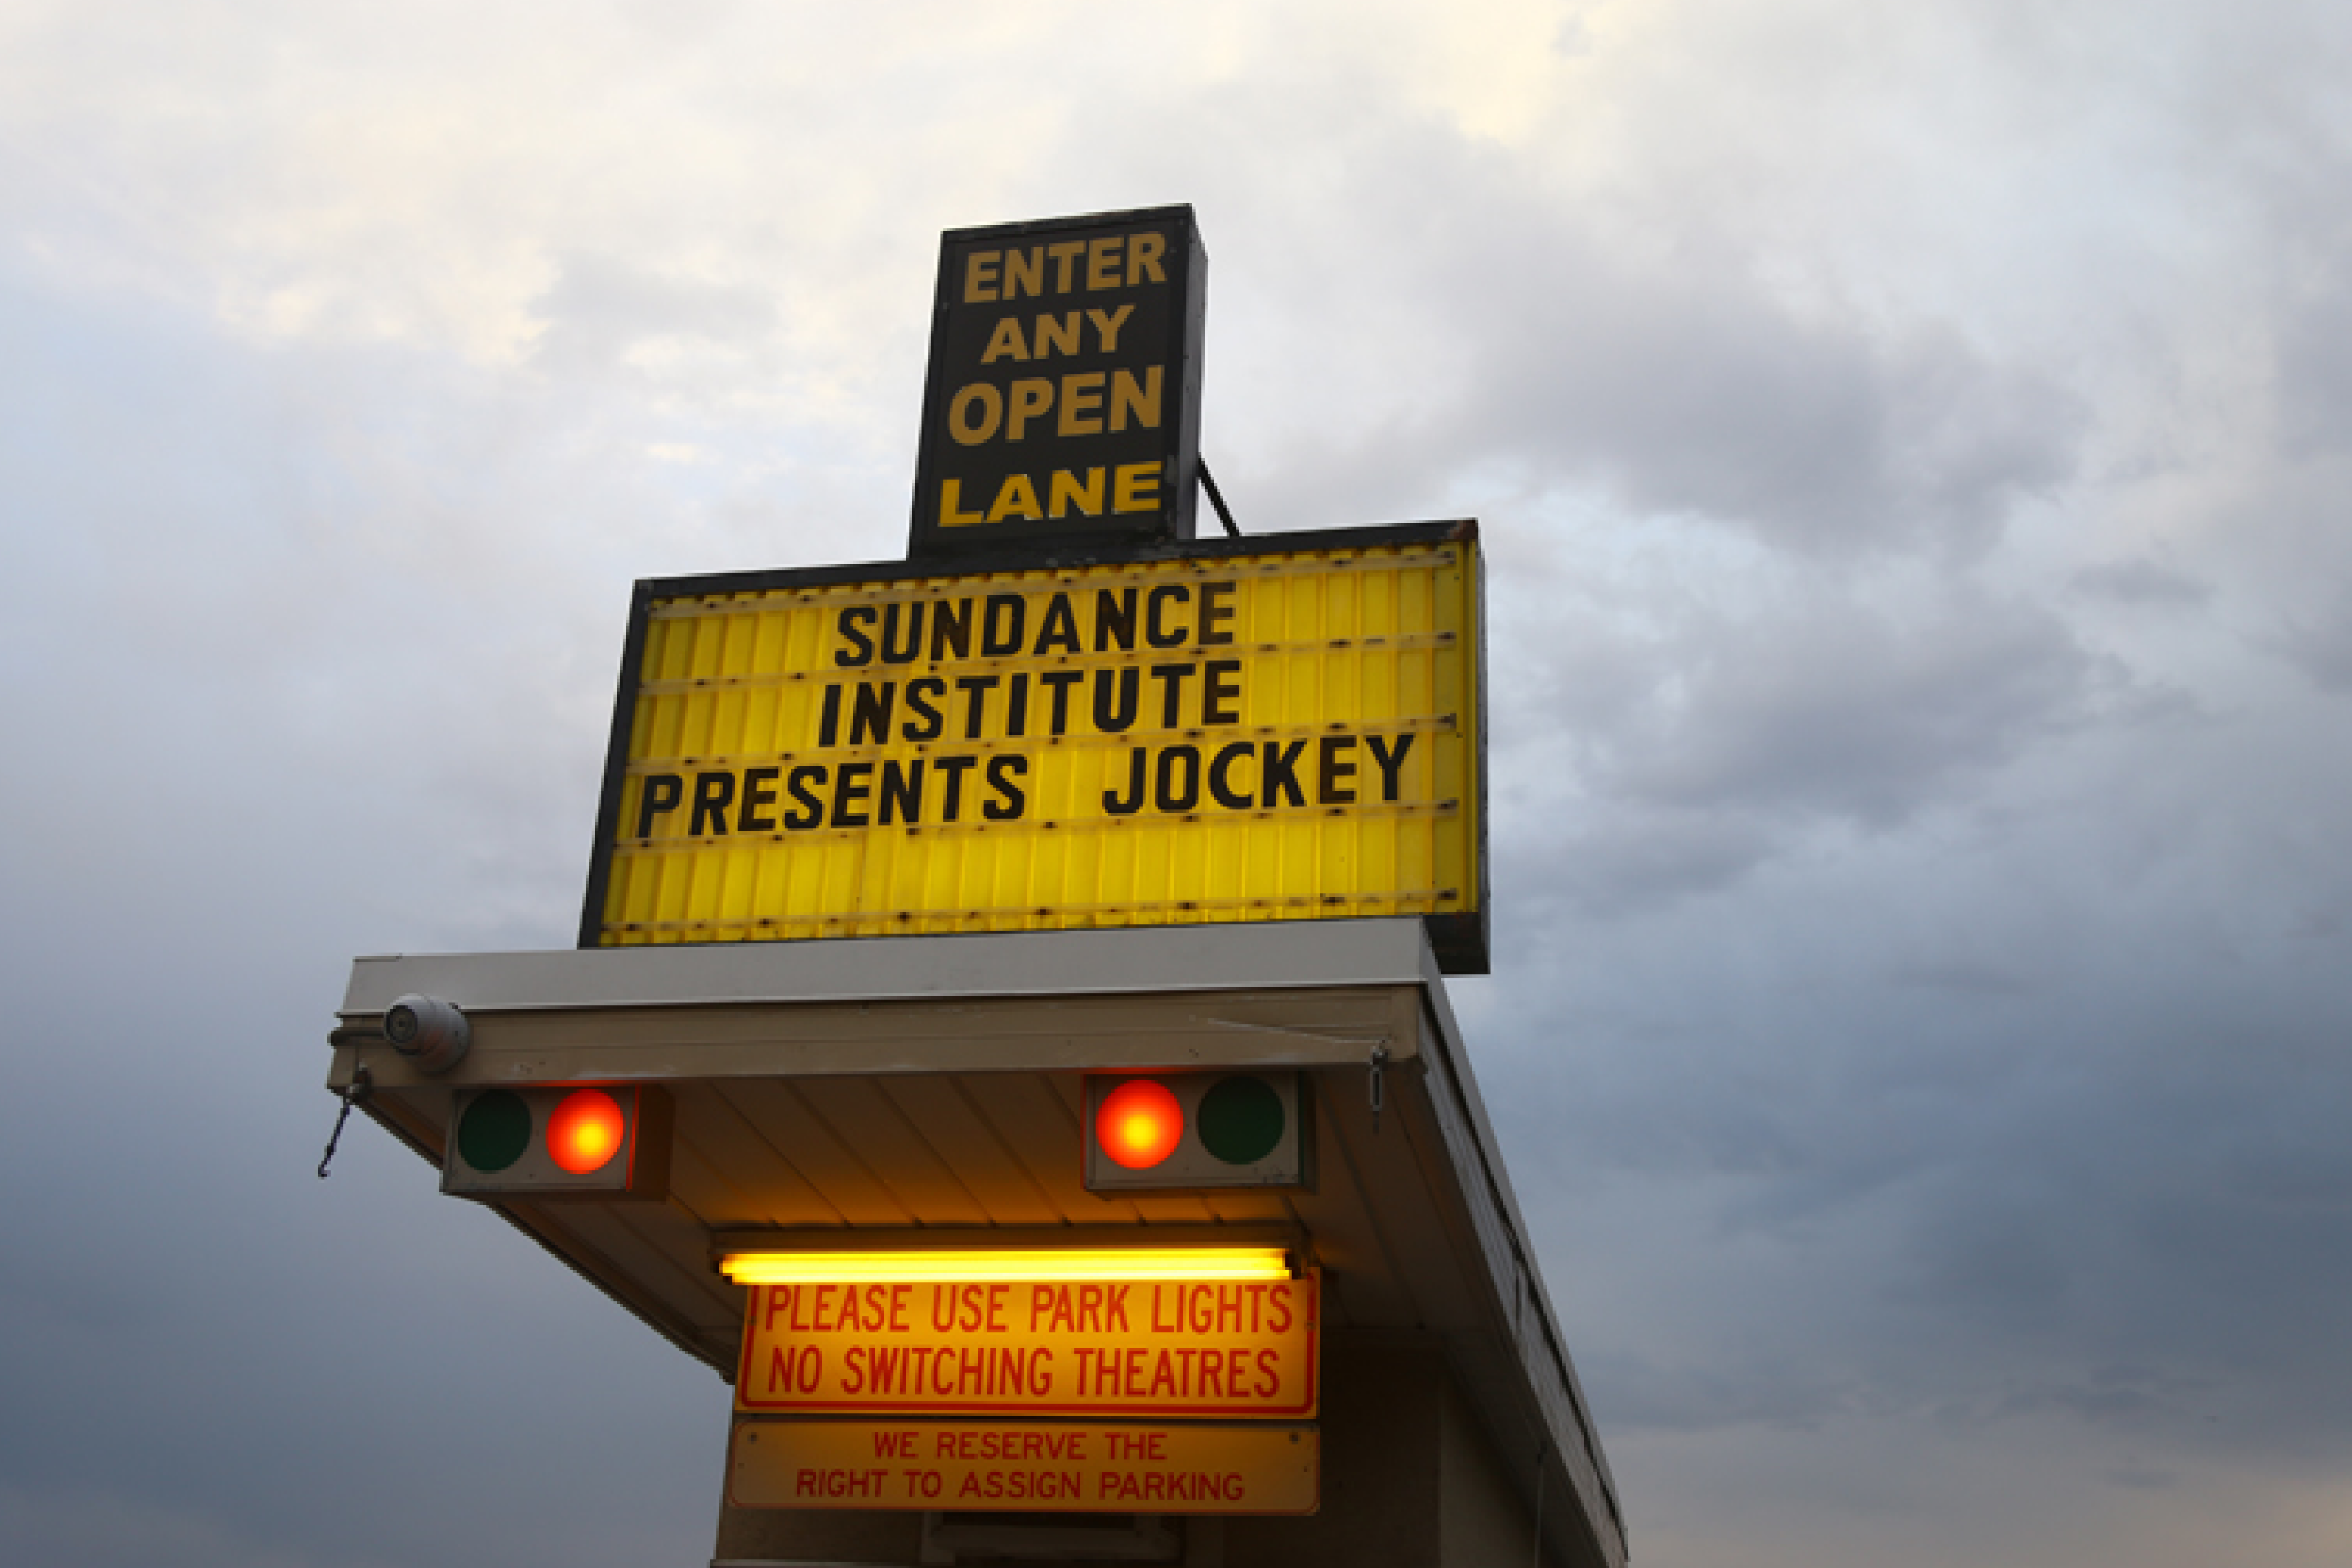 Marquesina al aire libre que muestra Sundance Institute presenta Jockey